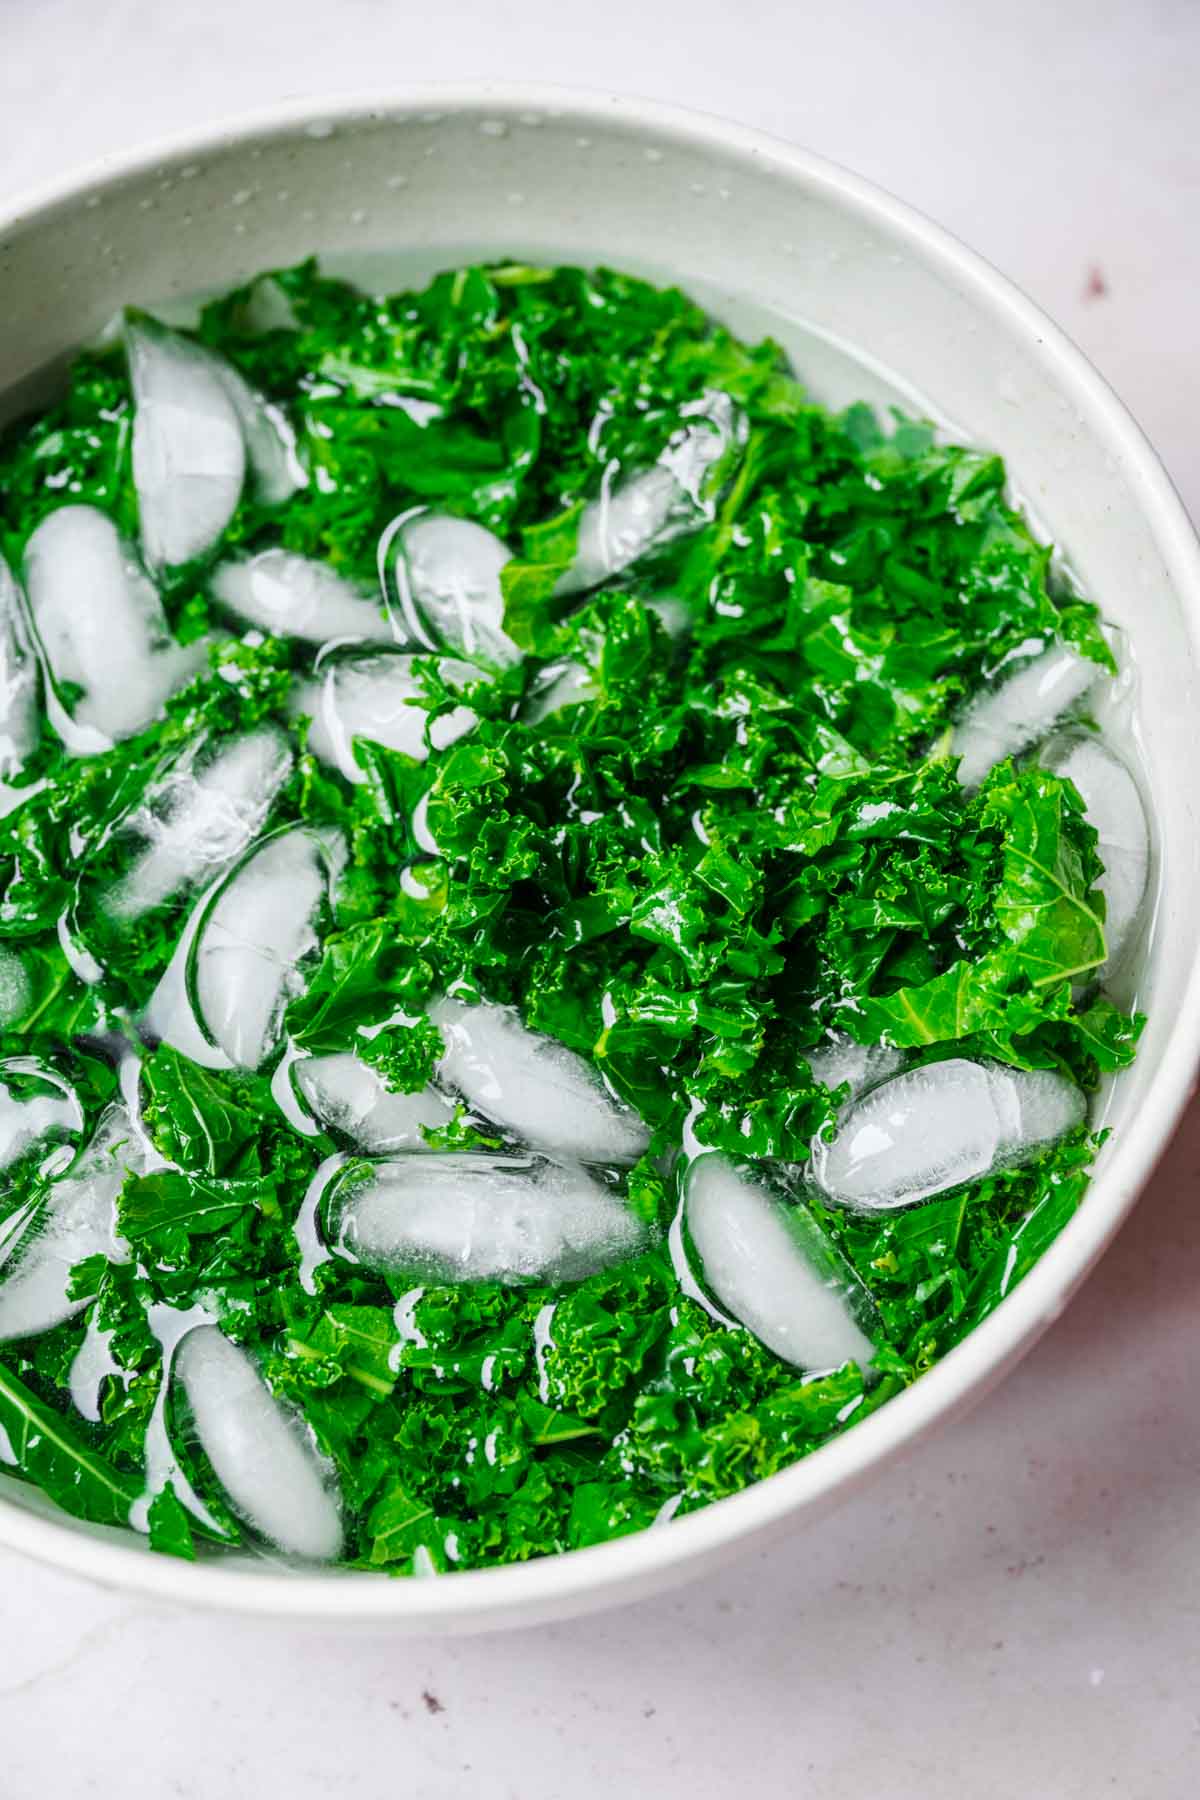 Sautéed Garlic Kale in ice water bath